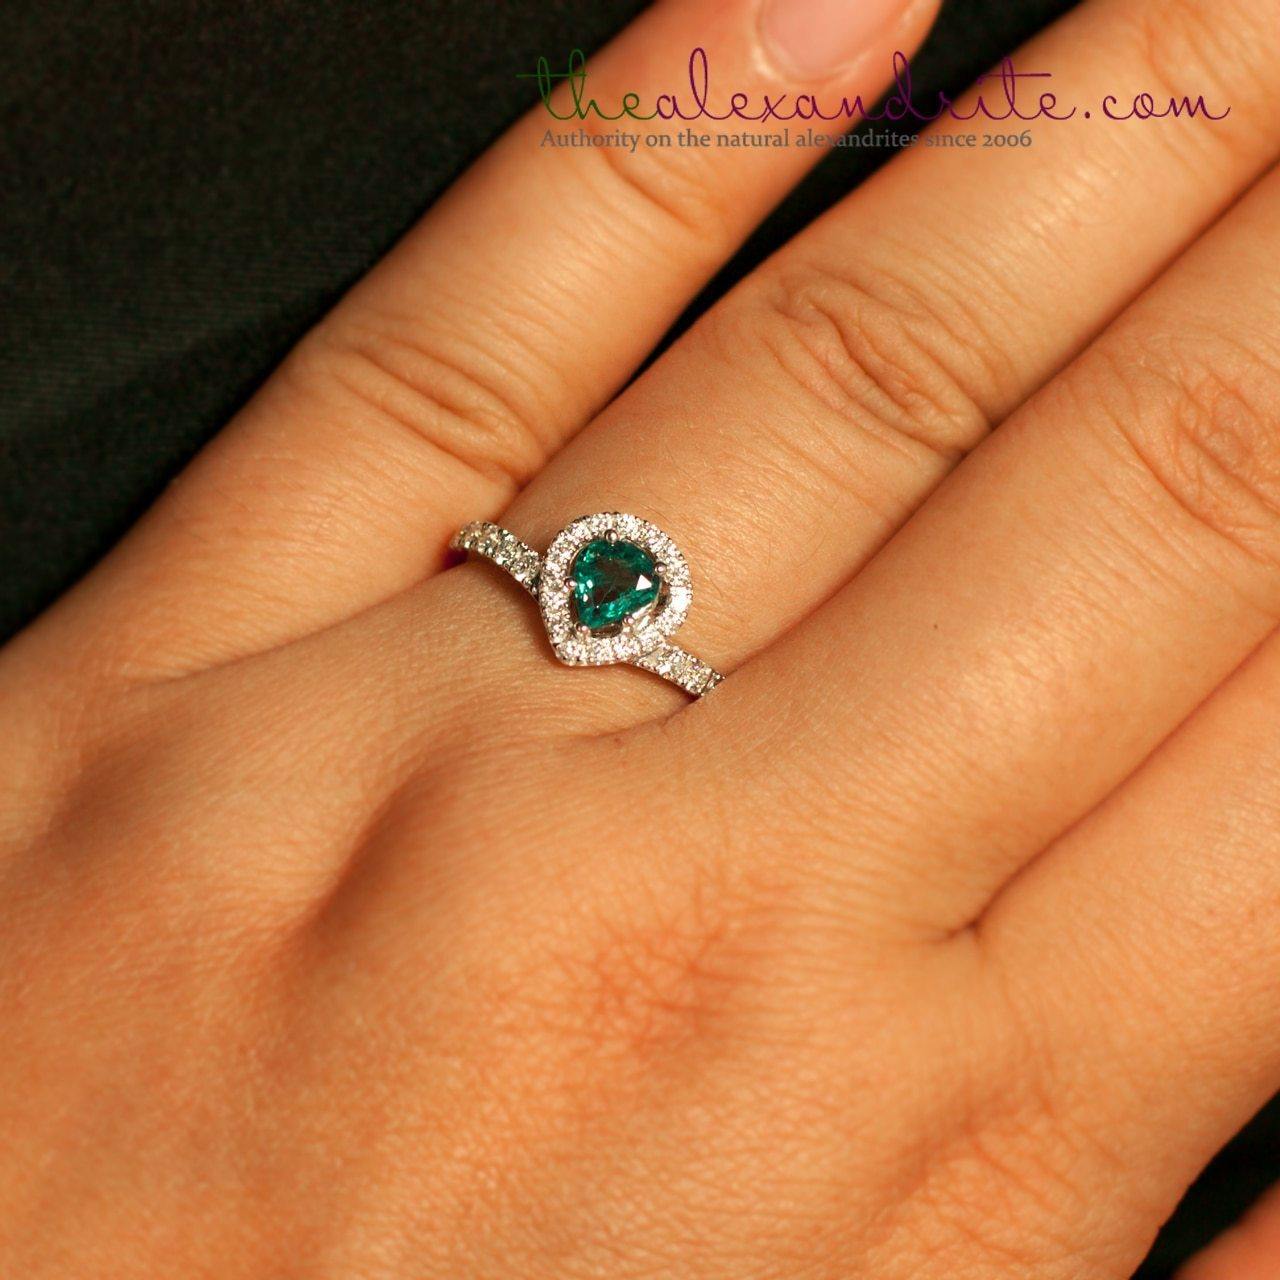 Natural Alexandrite 18k White Gold Engagement Ring - The Alexandrite